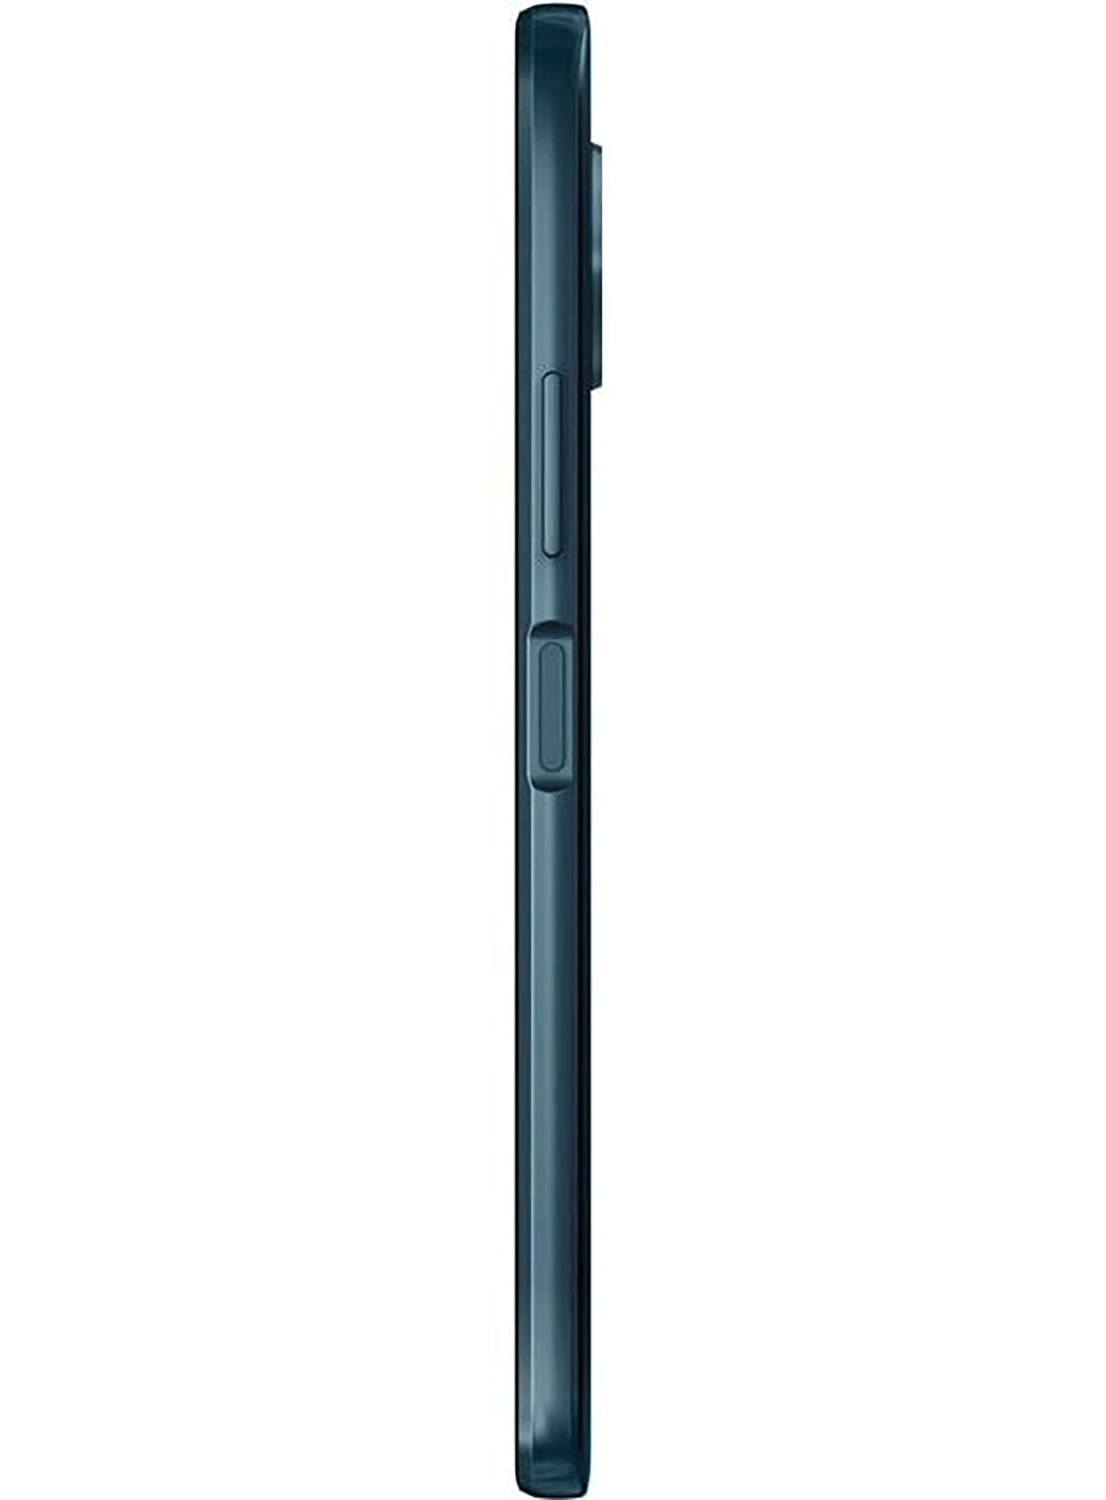 Nokia G50 5G 128 GB Dual-SIM